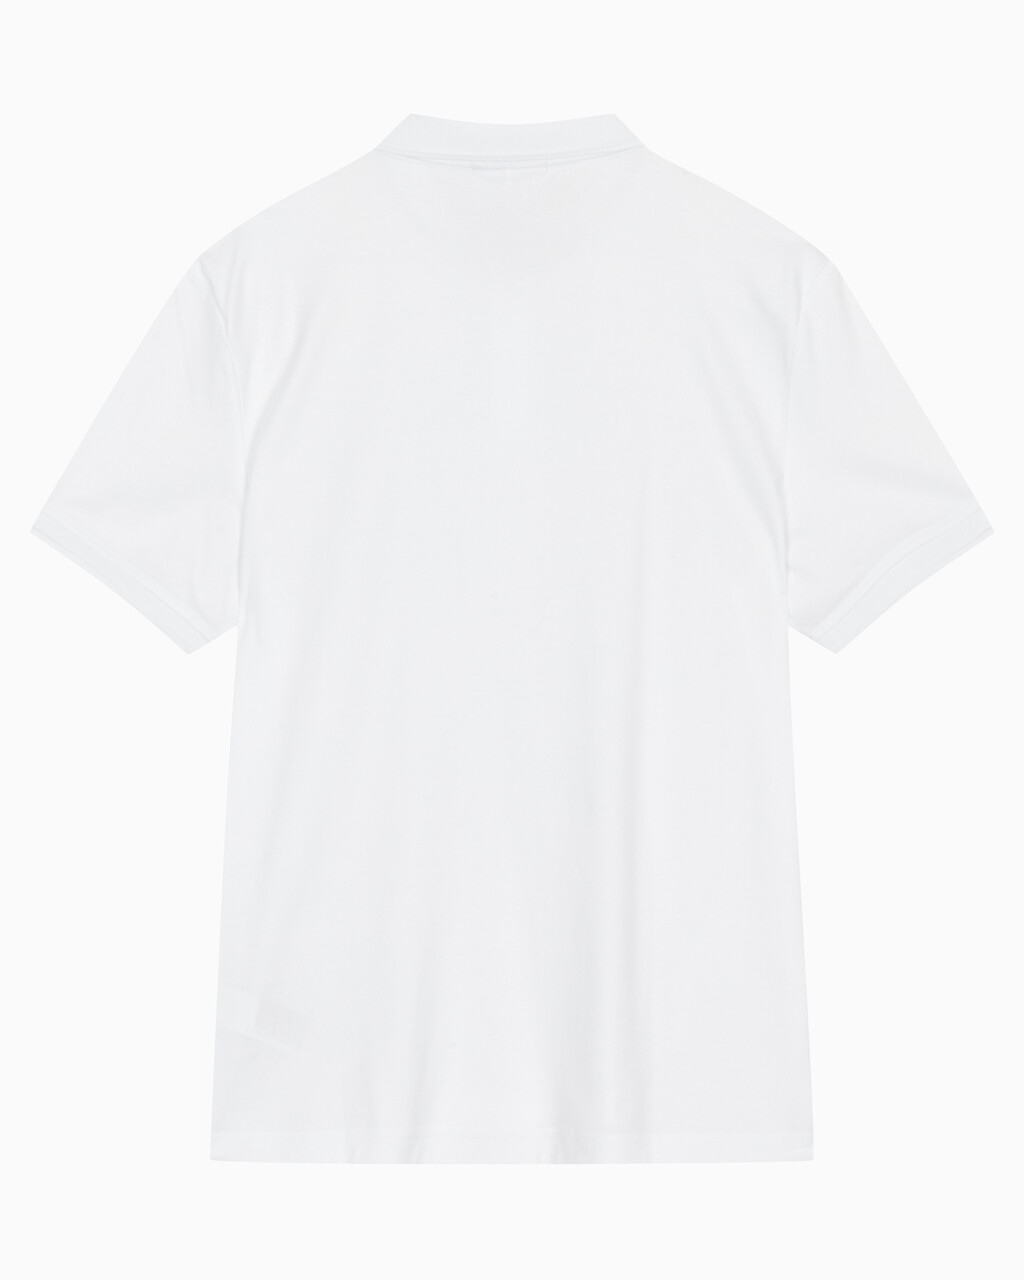 Buy 남성 톤온톤 로고 레귤러핏 폴로 반팔 티셔츠 in color BRIGHT WHITE